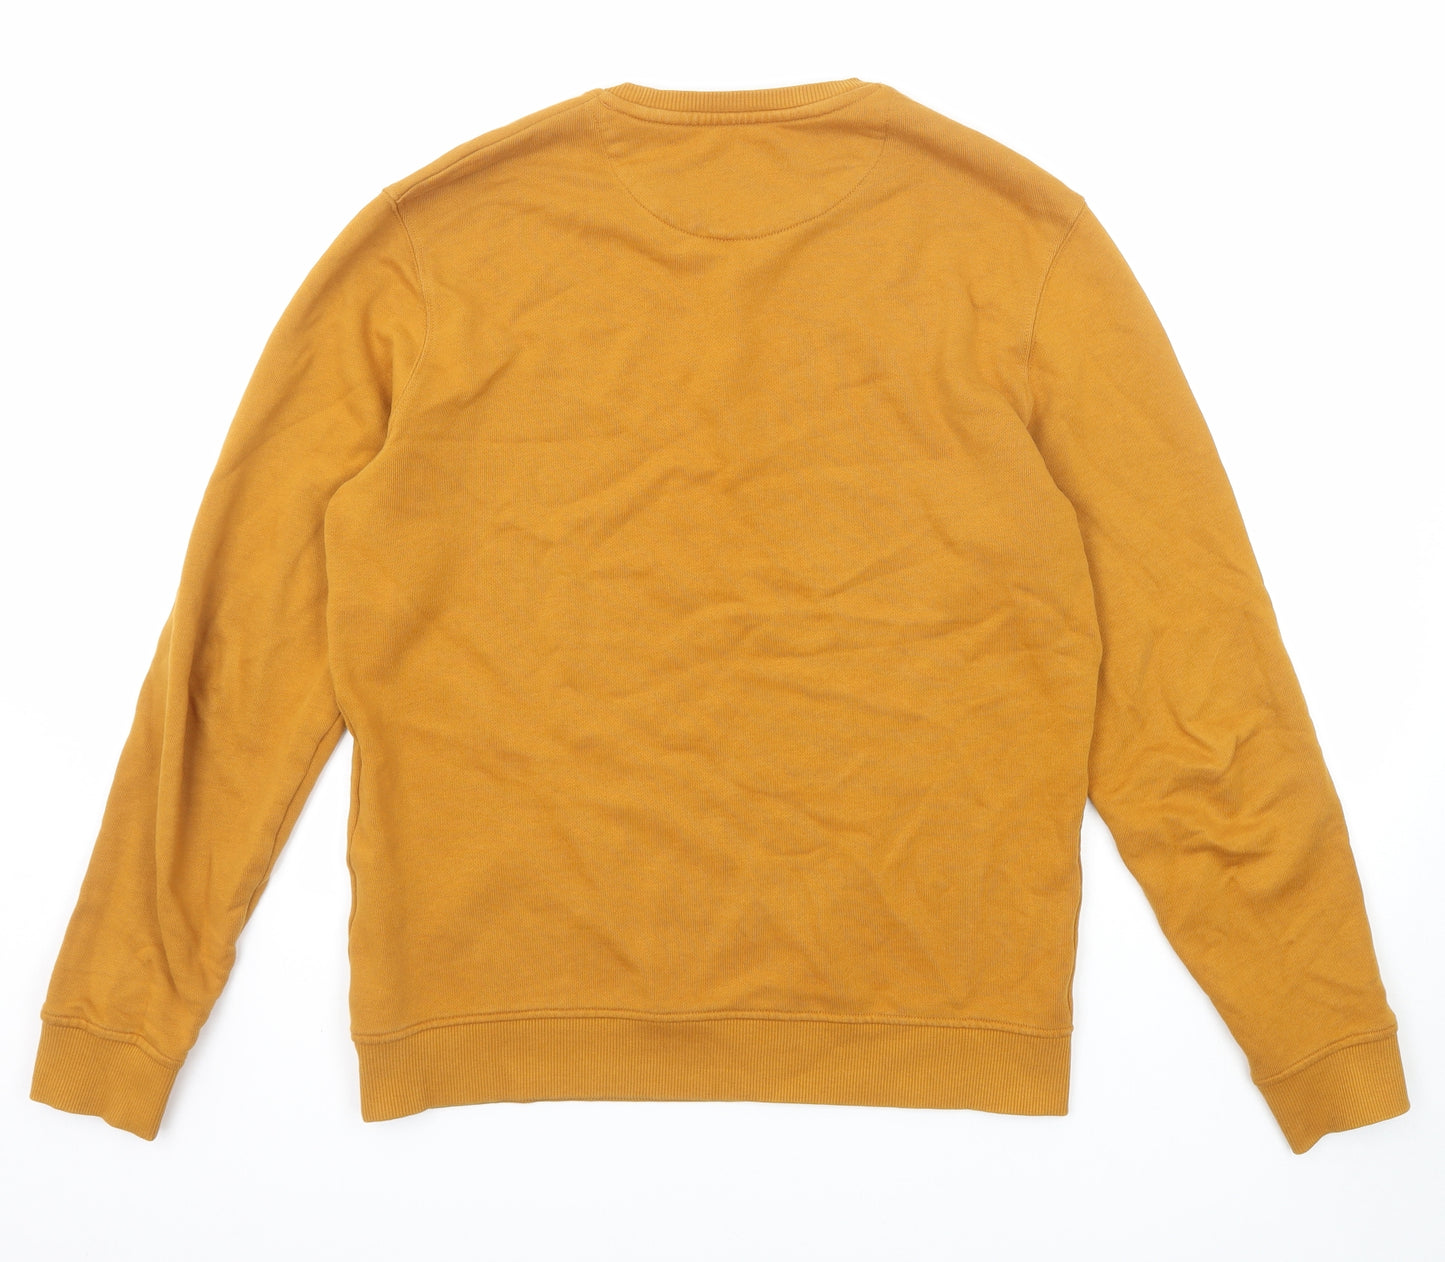 Lyle & Scott Mens Orange Cotton Pullover Sweatshirt Size S